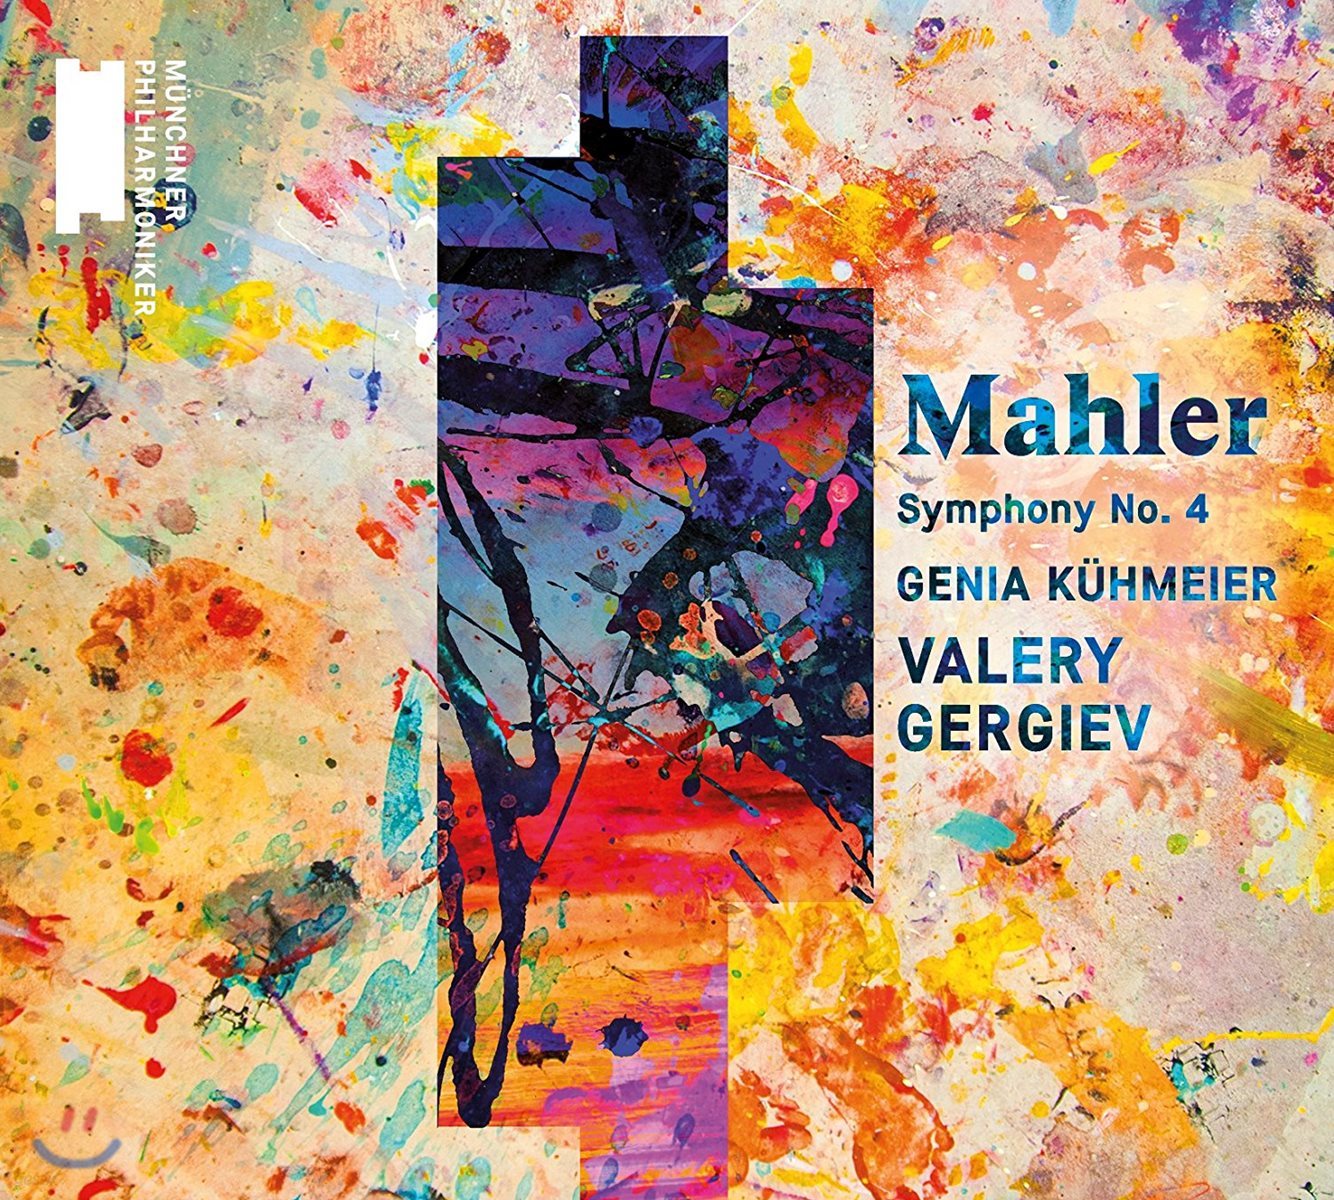 Valery Gergiev 말러: 교향곡 4번 - 발레리 게르기에프, 뮌헨 필하모니 (Mahler: Symphony No.4)